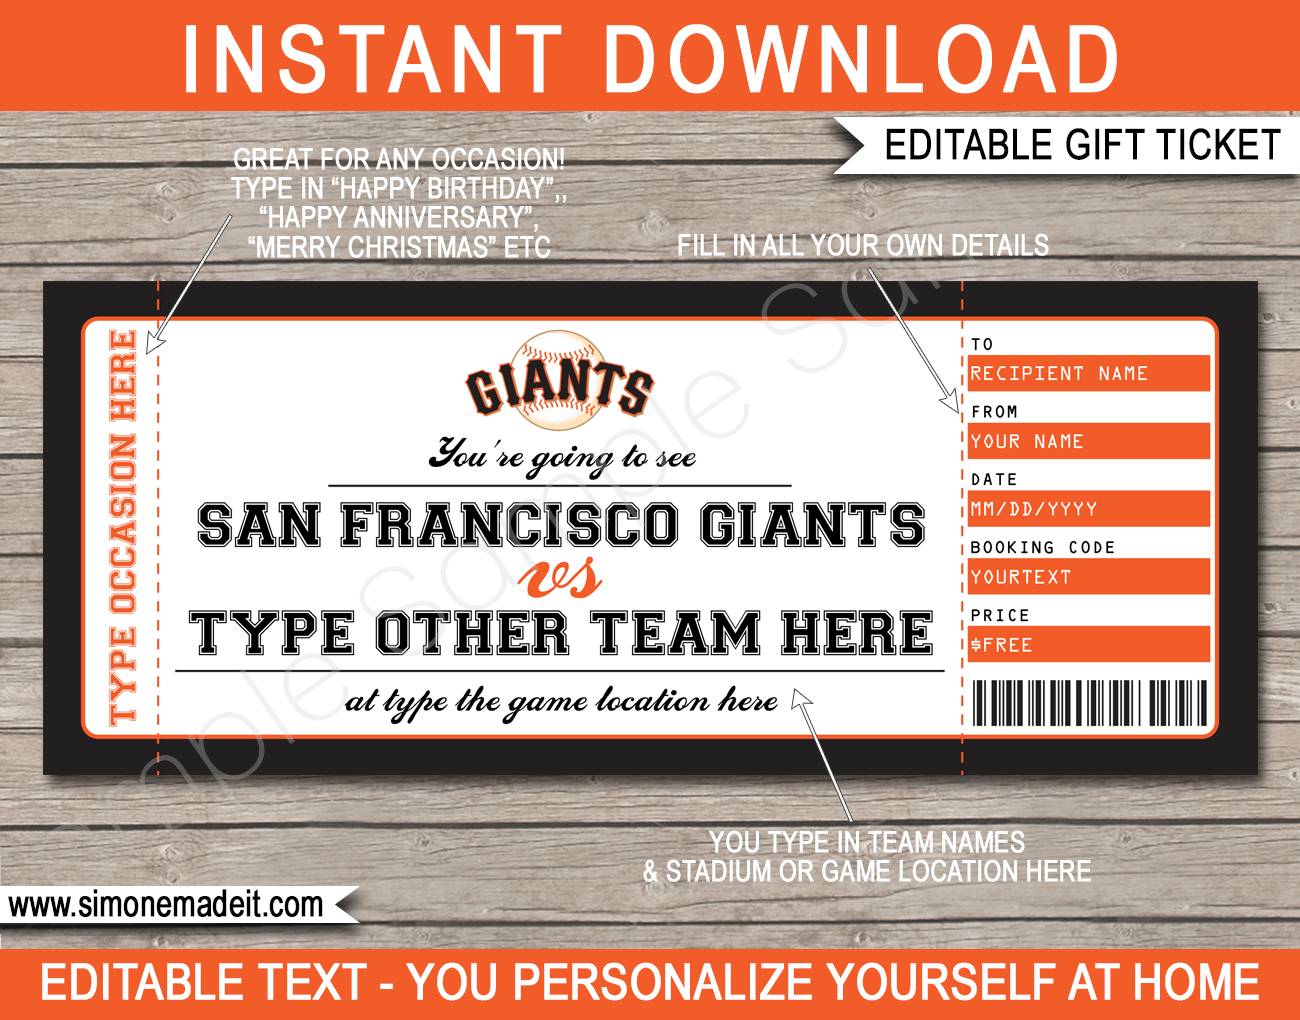 San Francisco Giants Game Ticket Gift Voucher